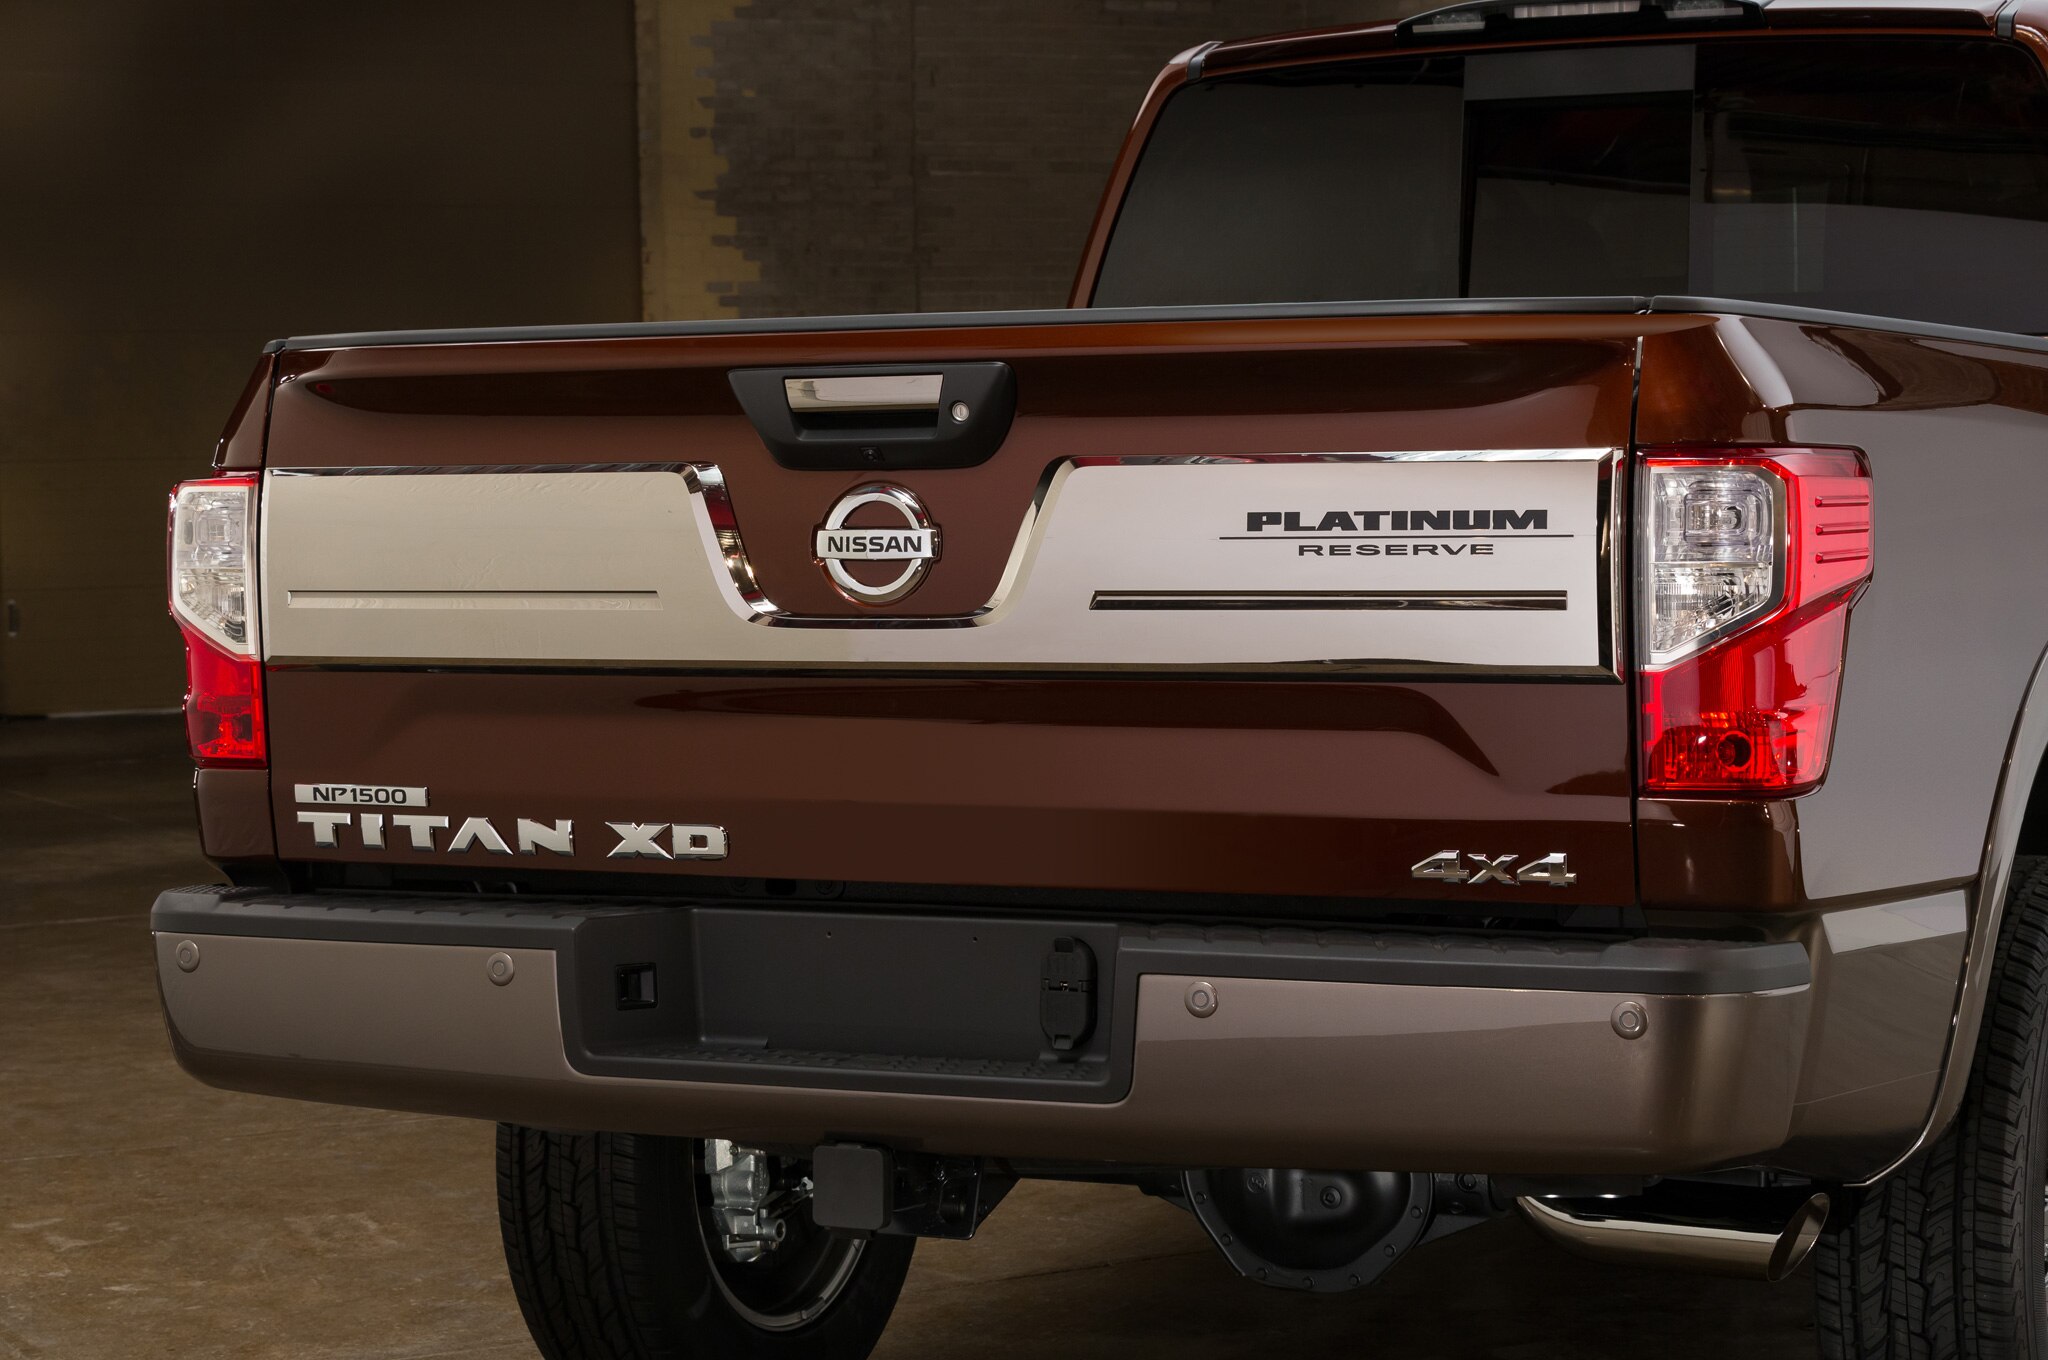 2016-Nissan-Titan-XD-Platnum-rear-end.jpg